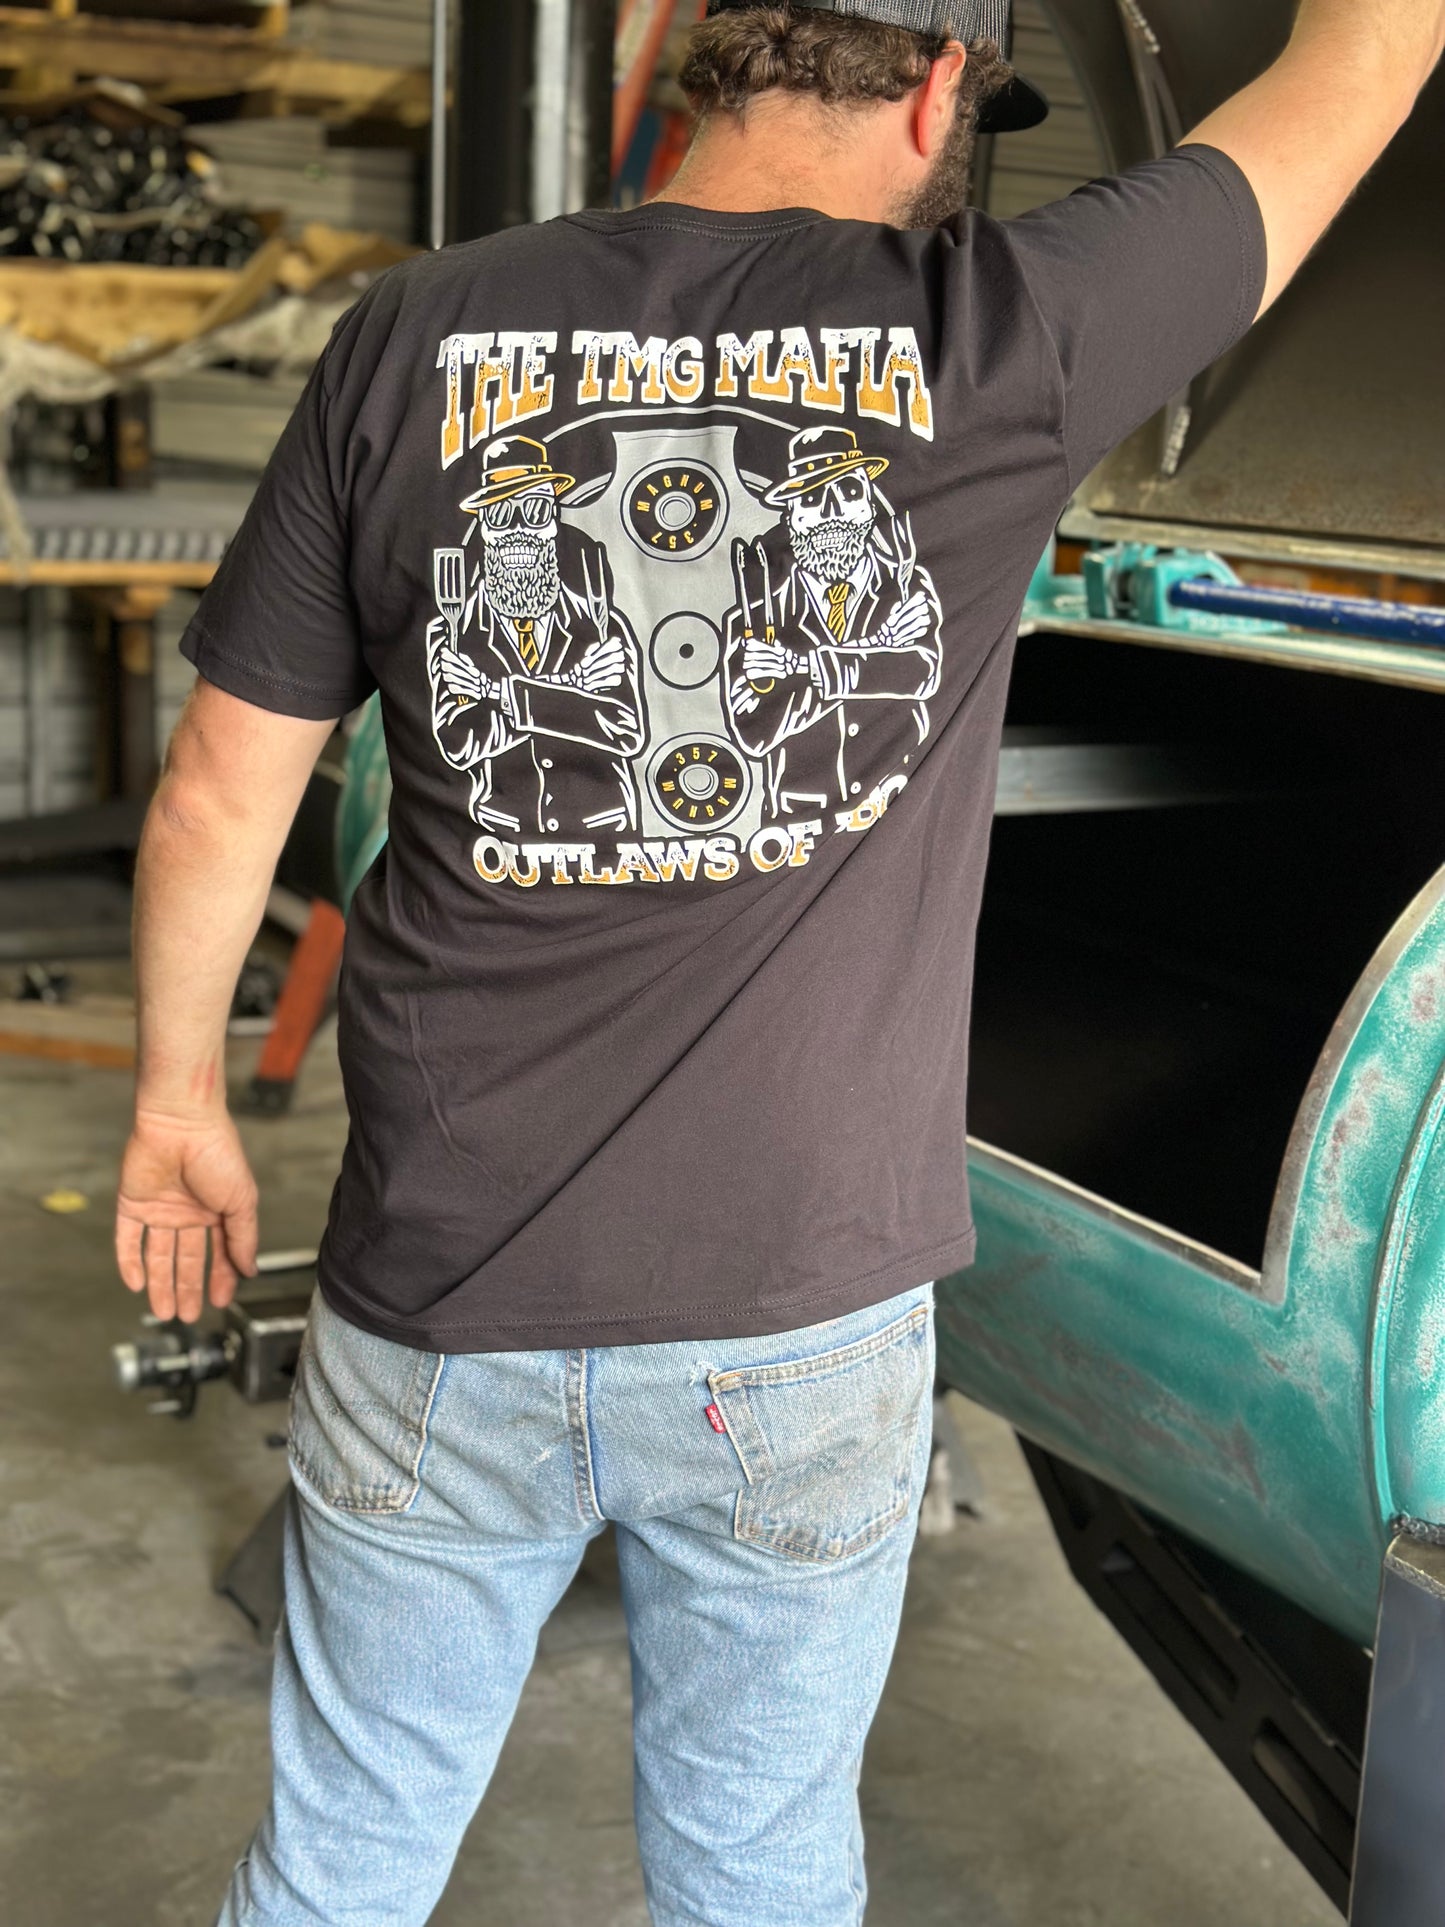 The TMG Mafia T-Shirt